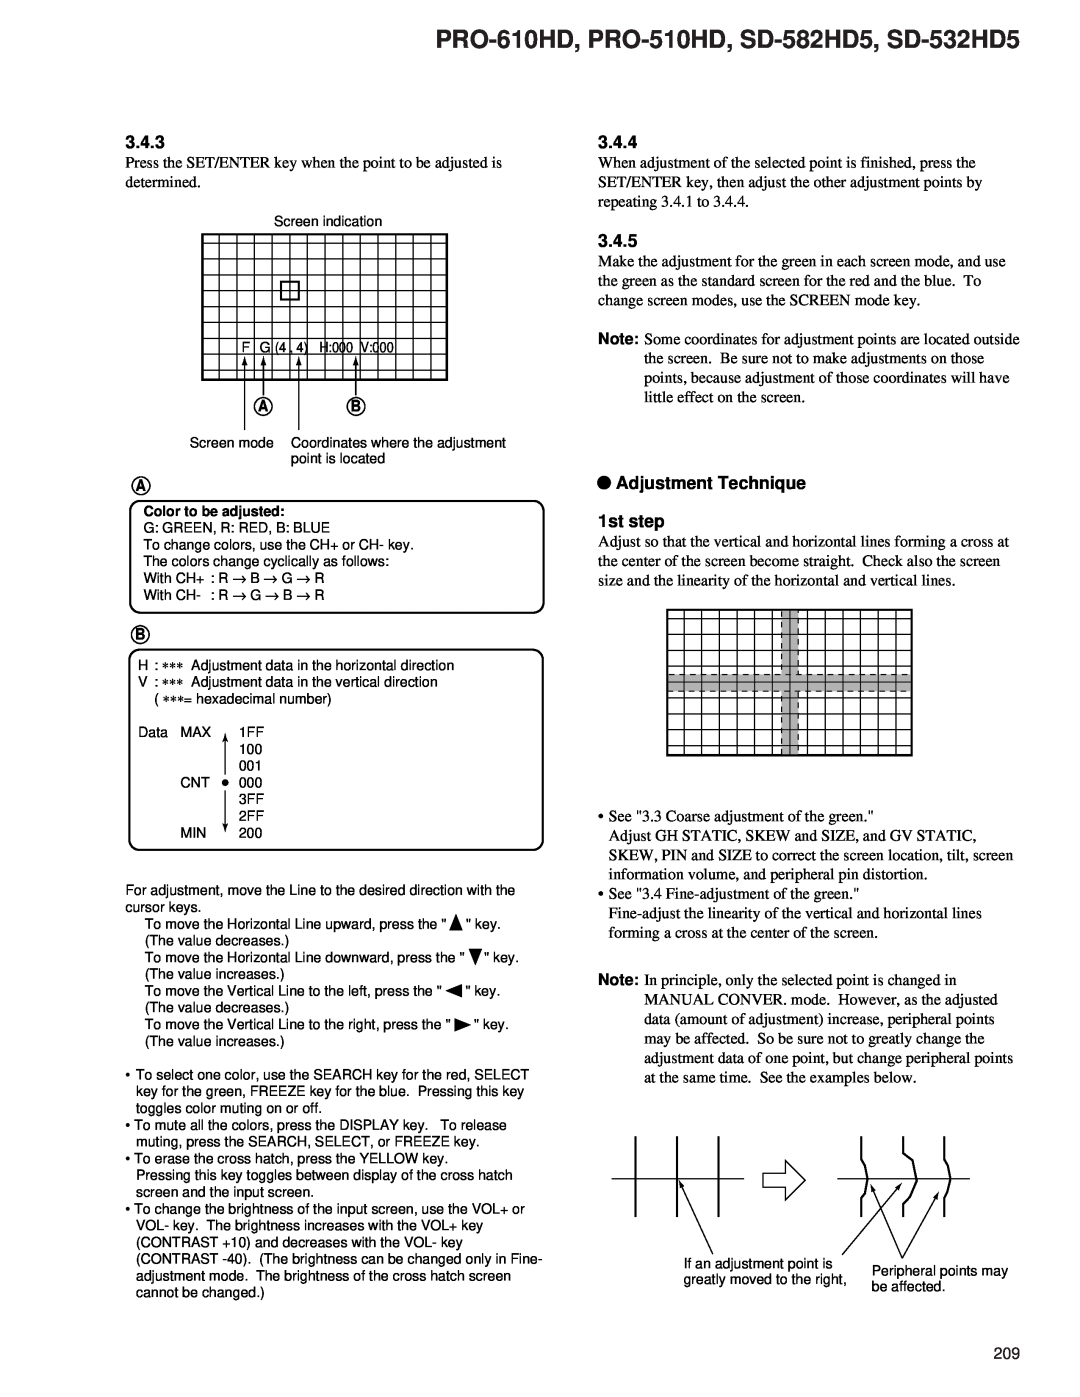 Pioneer service manual 3.4.3, 3.4.4, 3.4.5, Adjustment Technique 1st step, PRO-610HD, PRO-510HD, SD-582HD5, SD-532HD5 